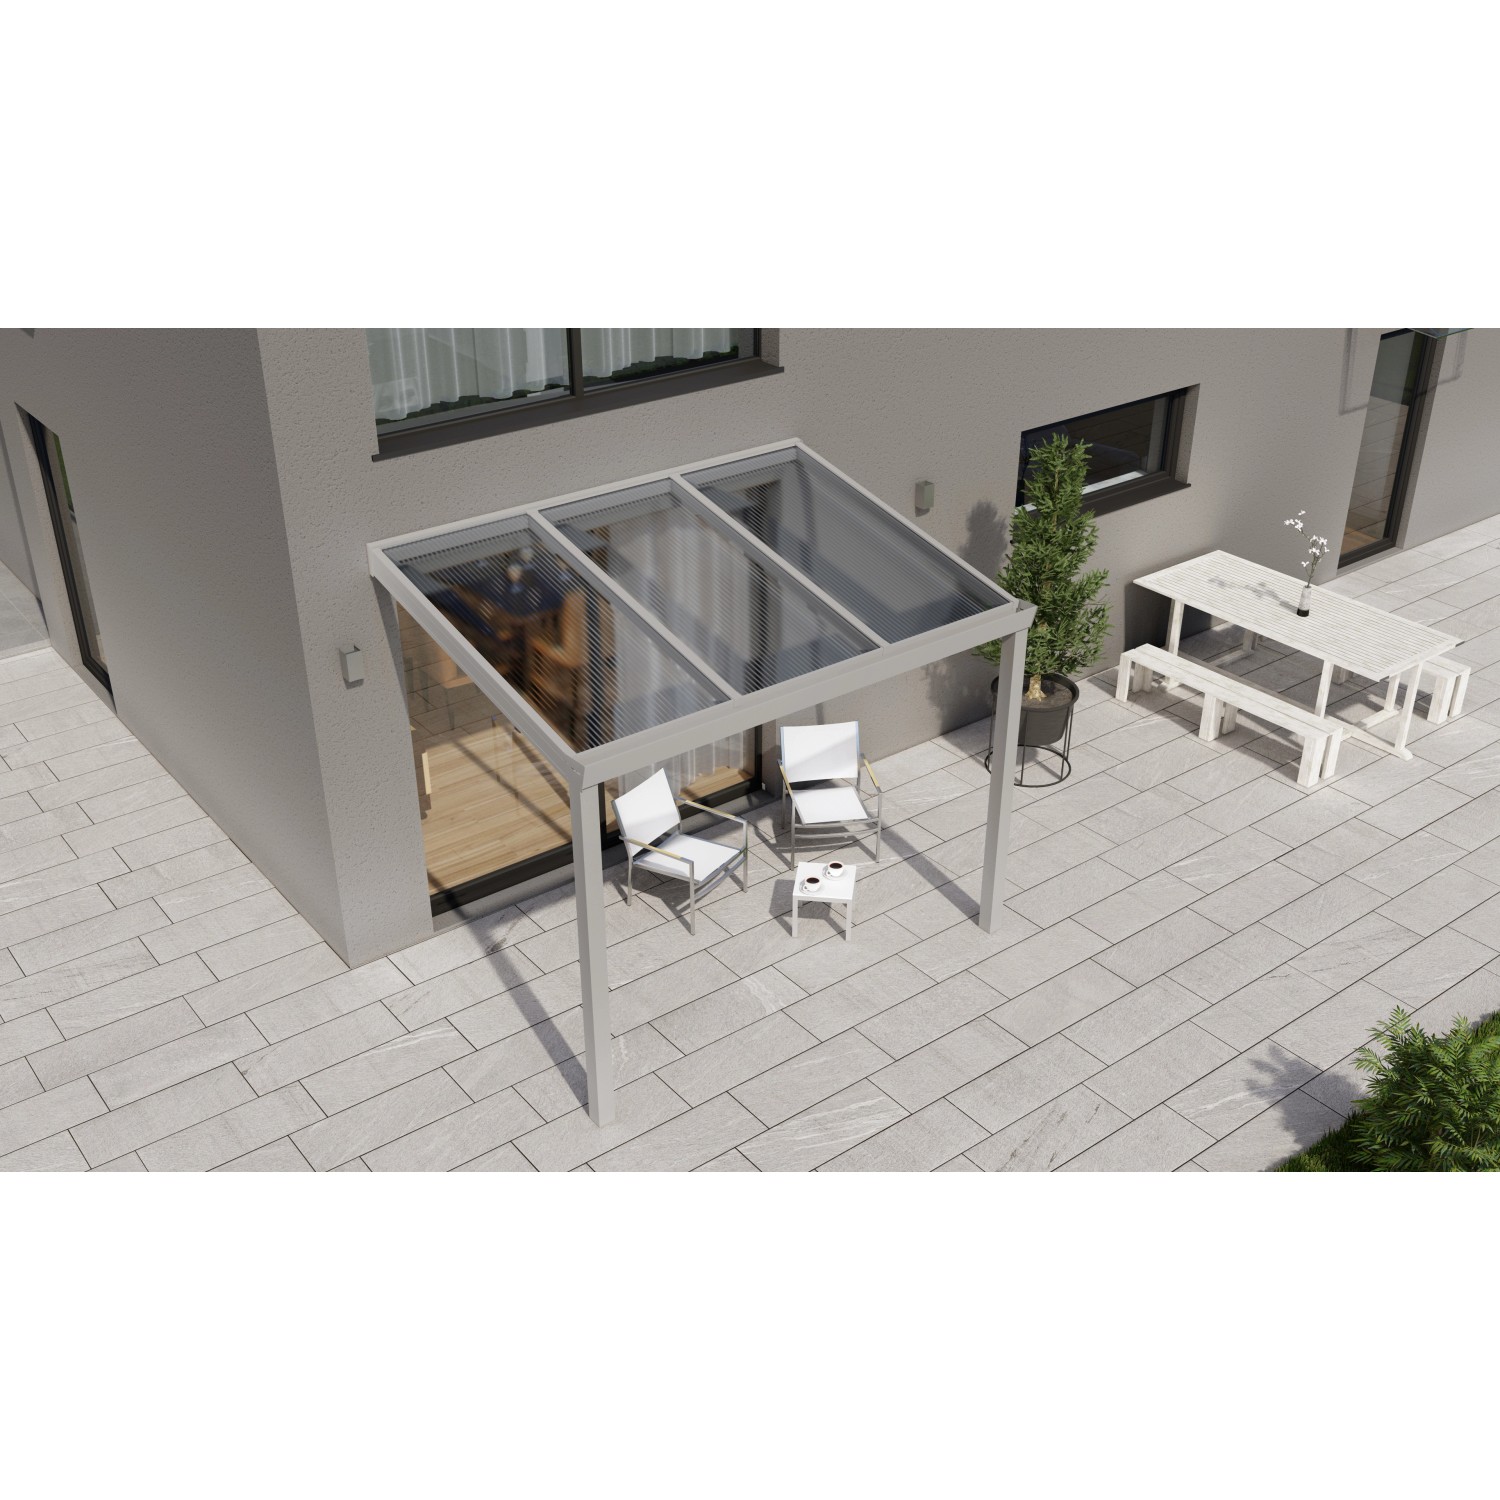 Terrassenüberdachung Professional 300 cm x 200 cm Grau Struktur PC Klar von GARDENDREAMS